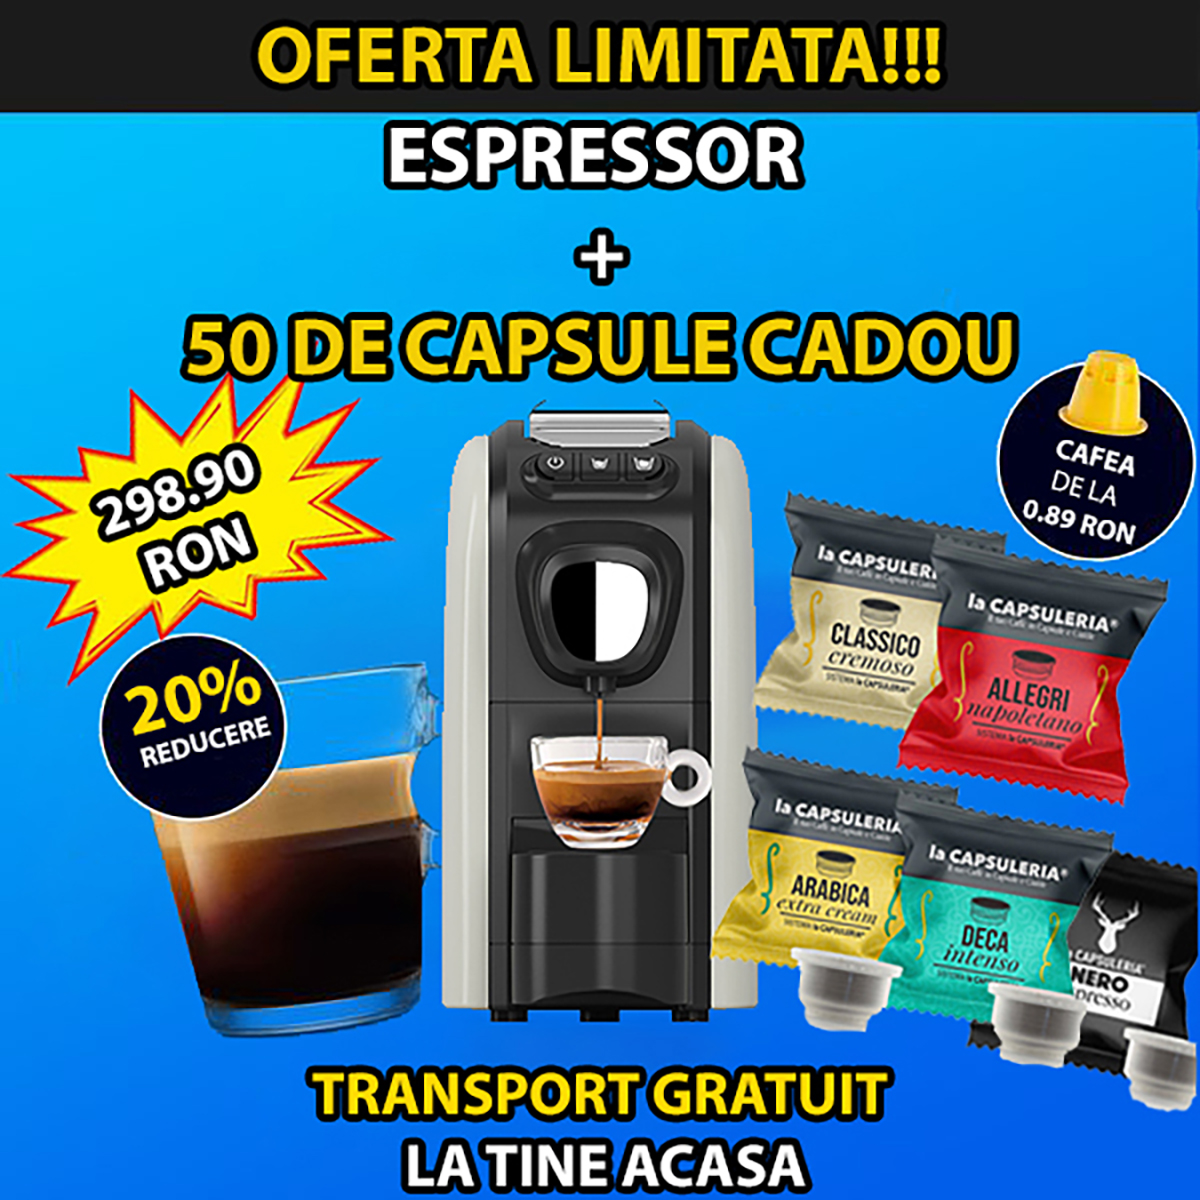 Capsuleria - Promo Espressor + 50 de capsule cadou